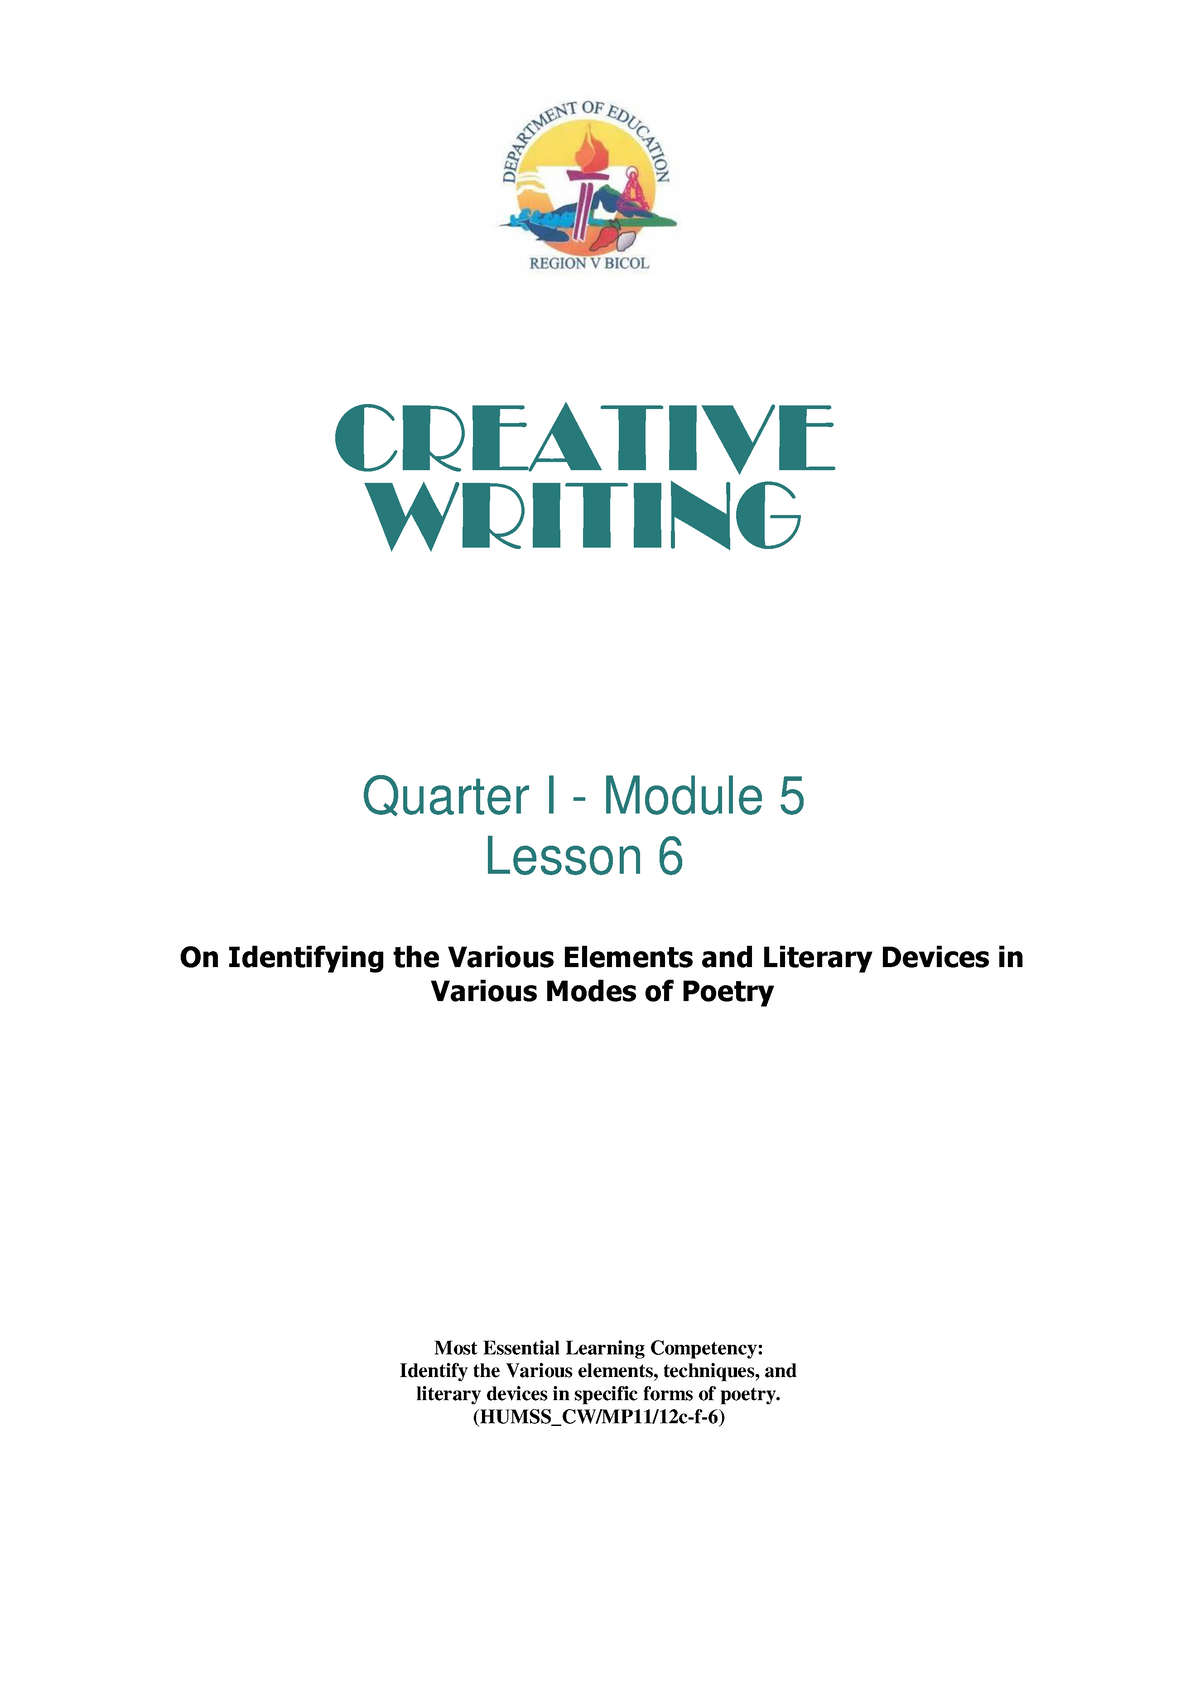 creative writing quarter 3 module 7